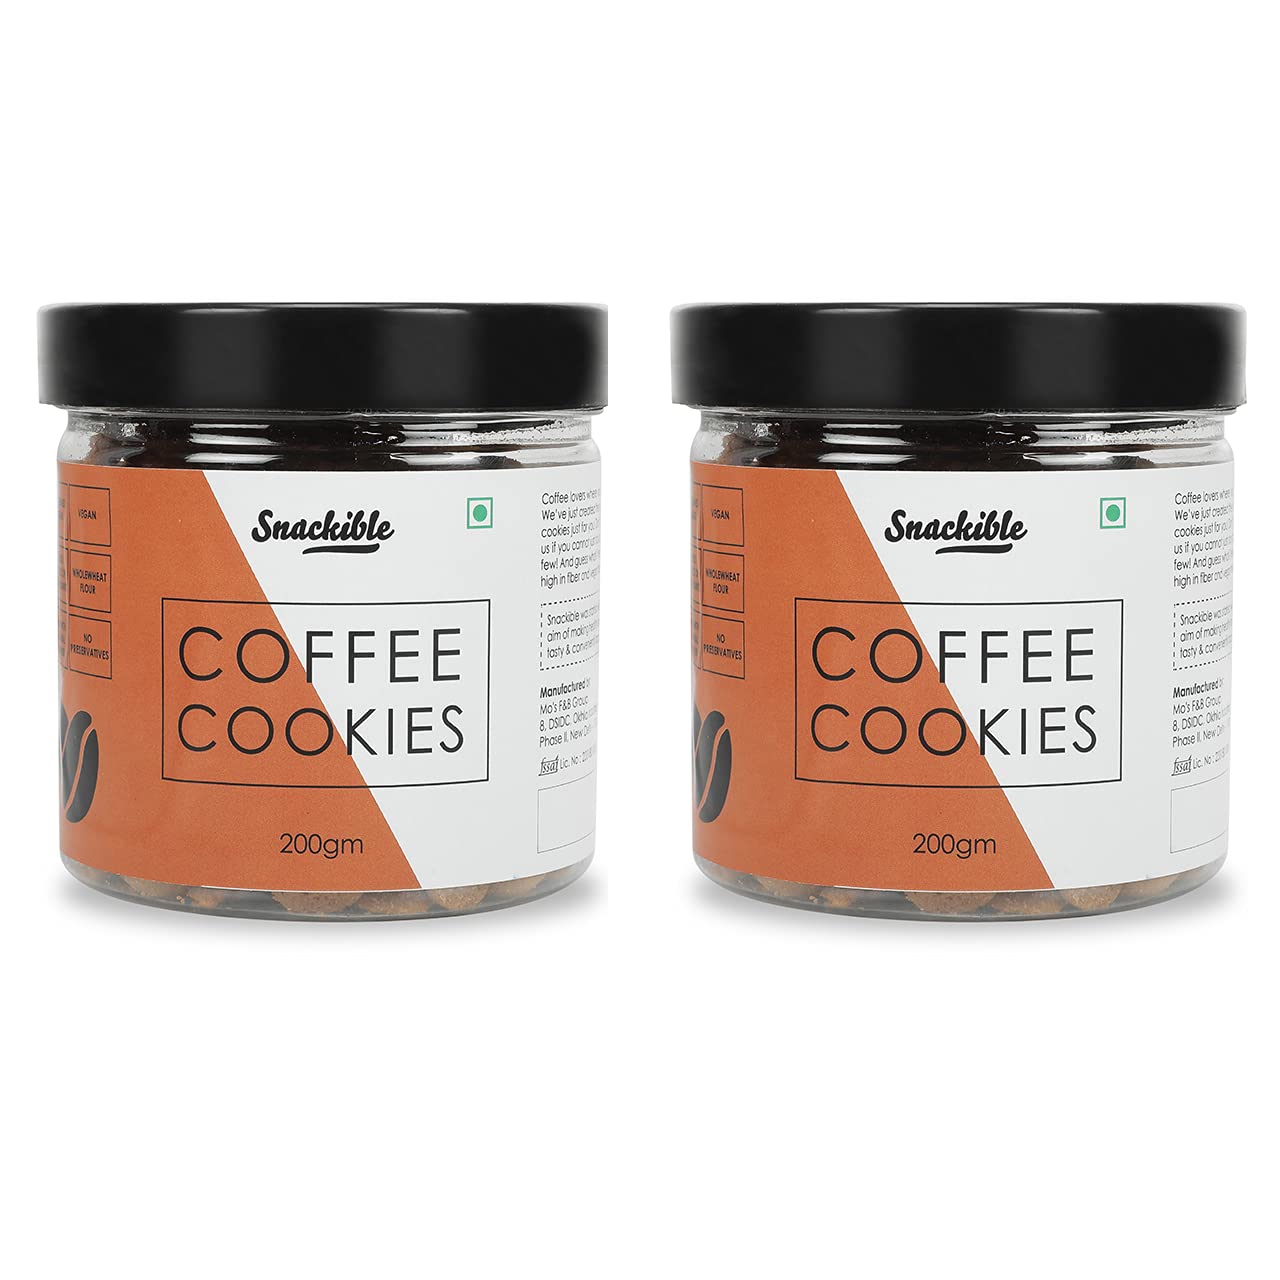 Snackible Coffee Cookies Image